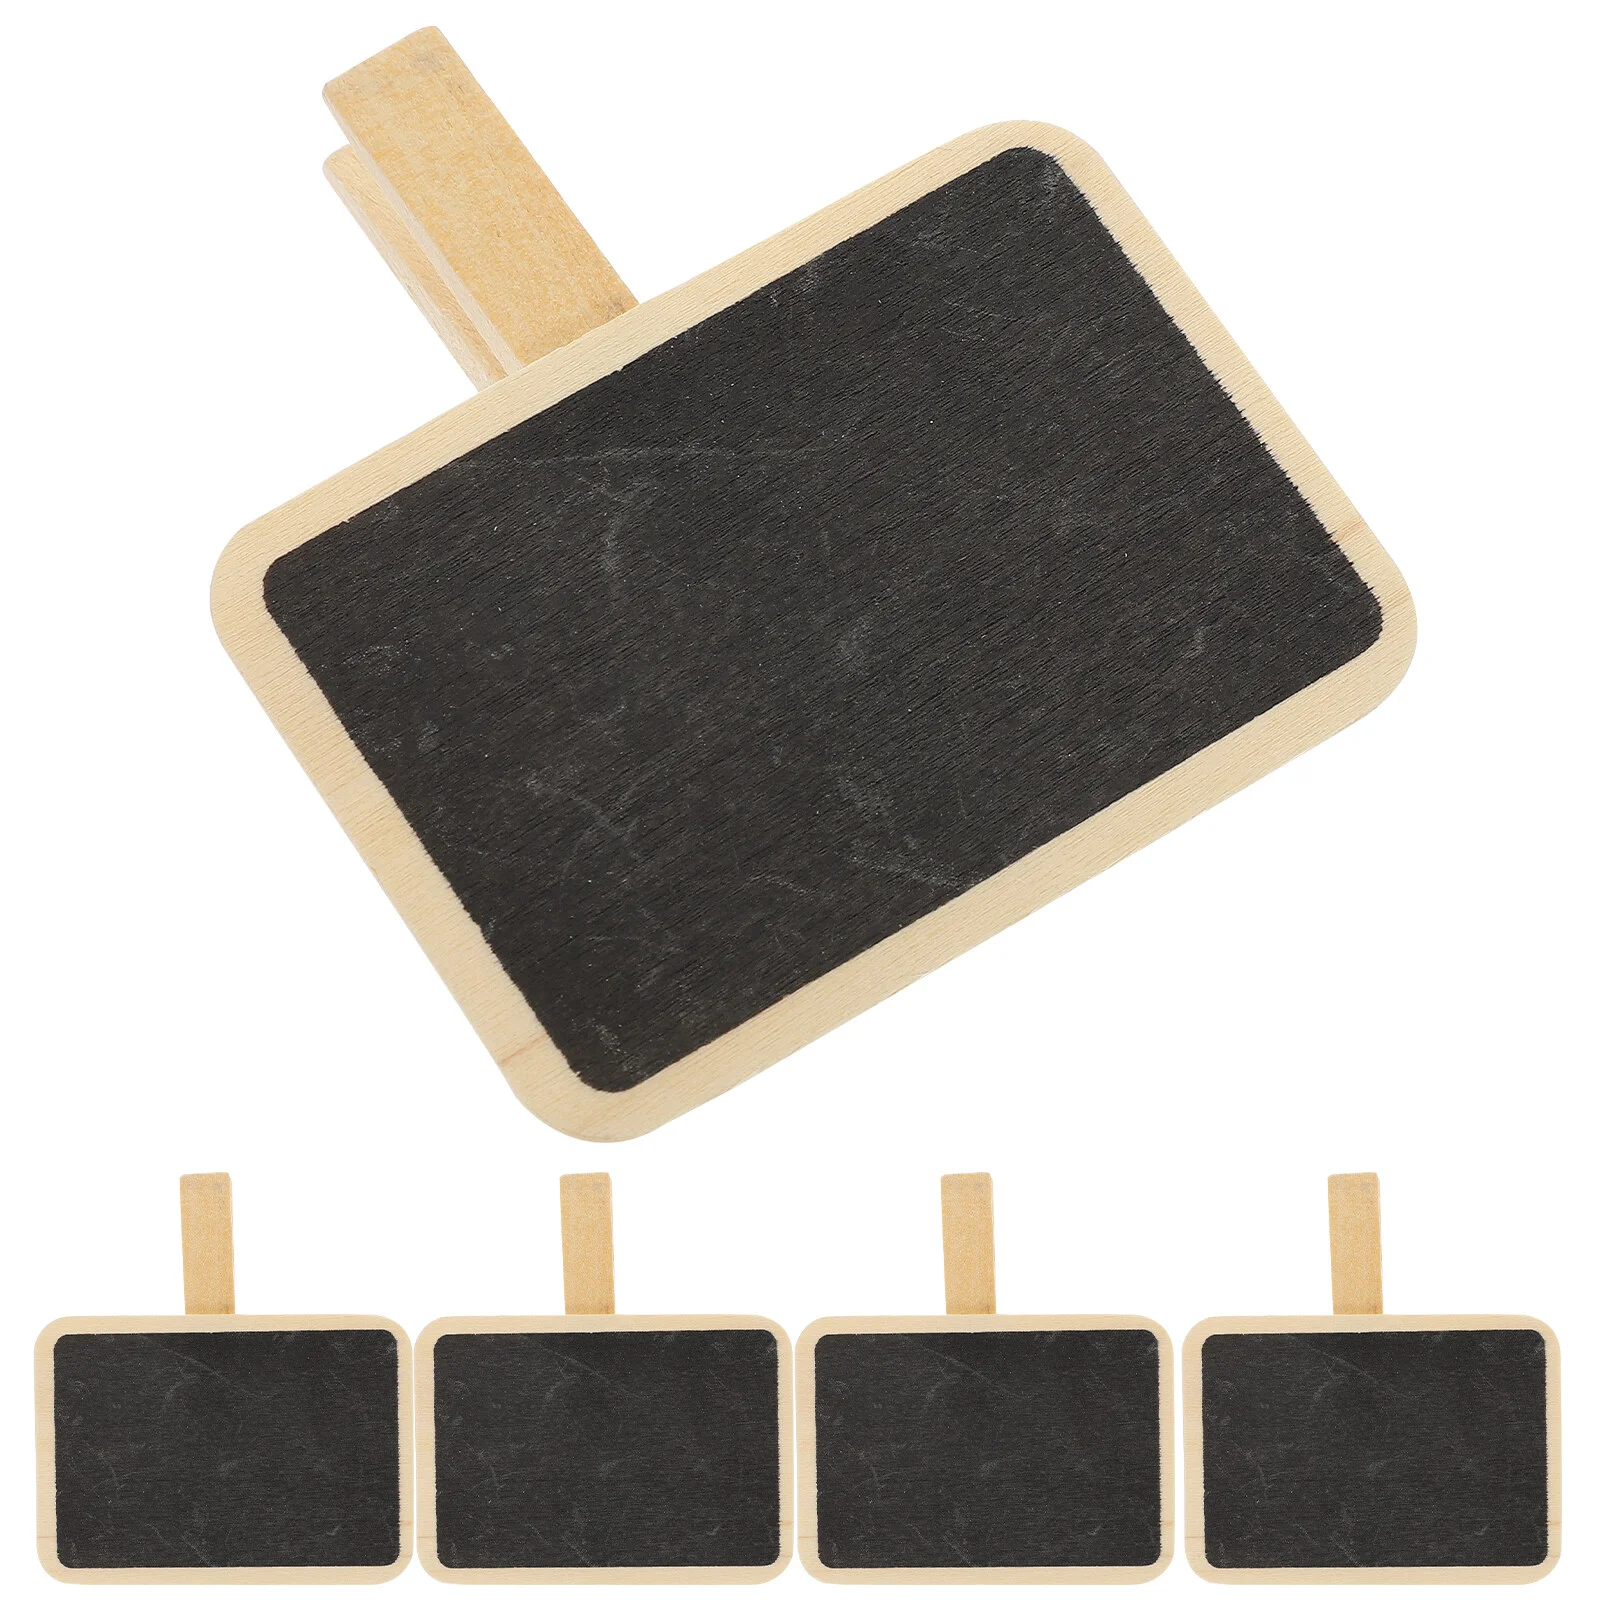 

10 Pcs Food Labels Wooden Clip Board Memo Memorandum 6.8X4.8CM Chalkboard Black Pvc Blackboard Signs Clamps